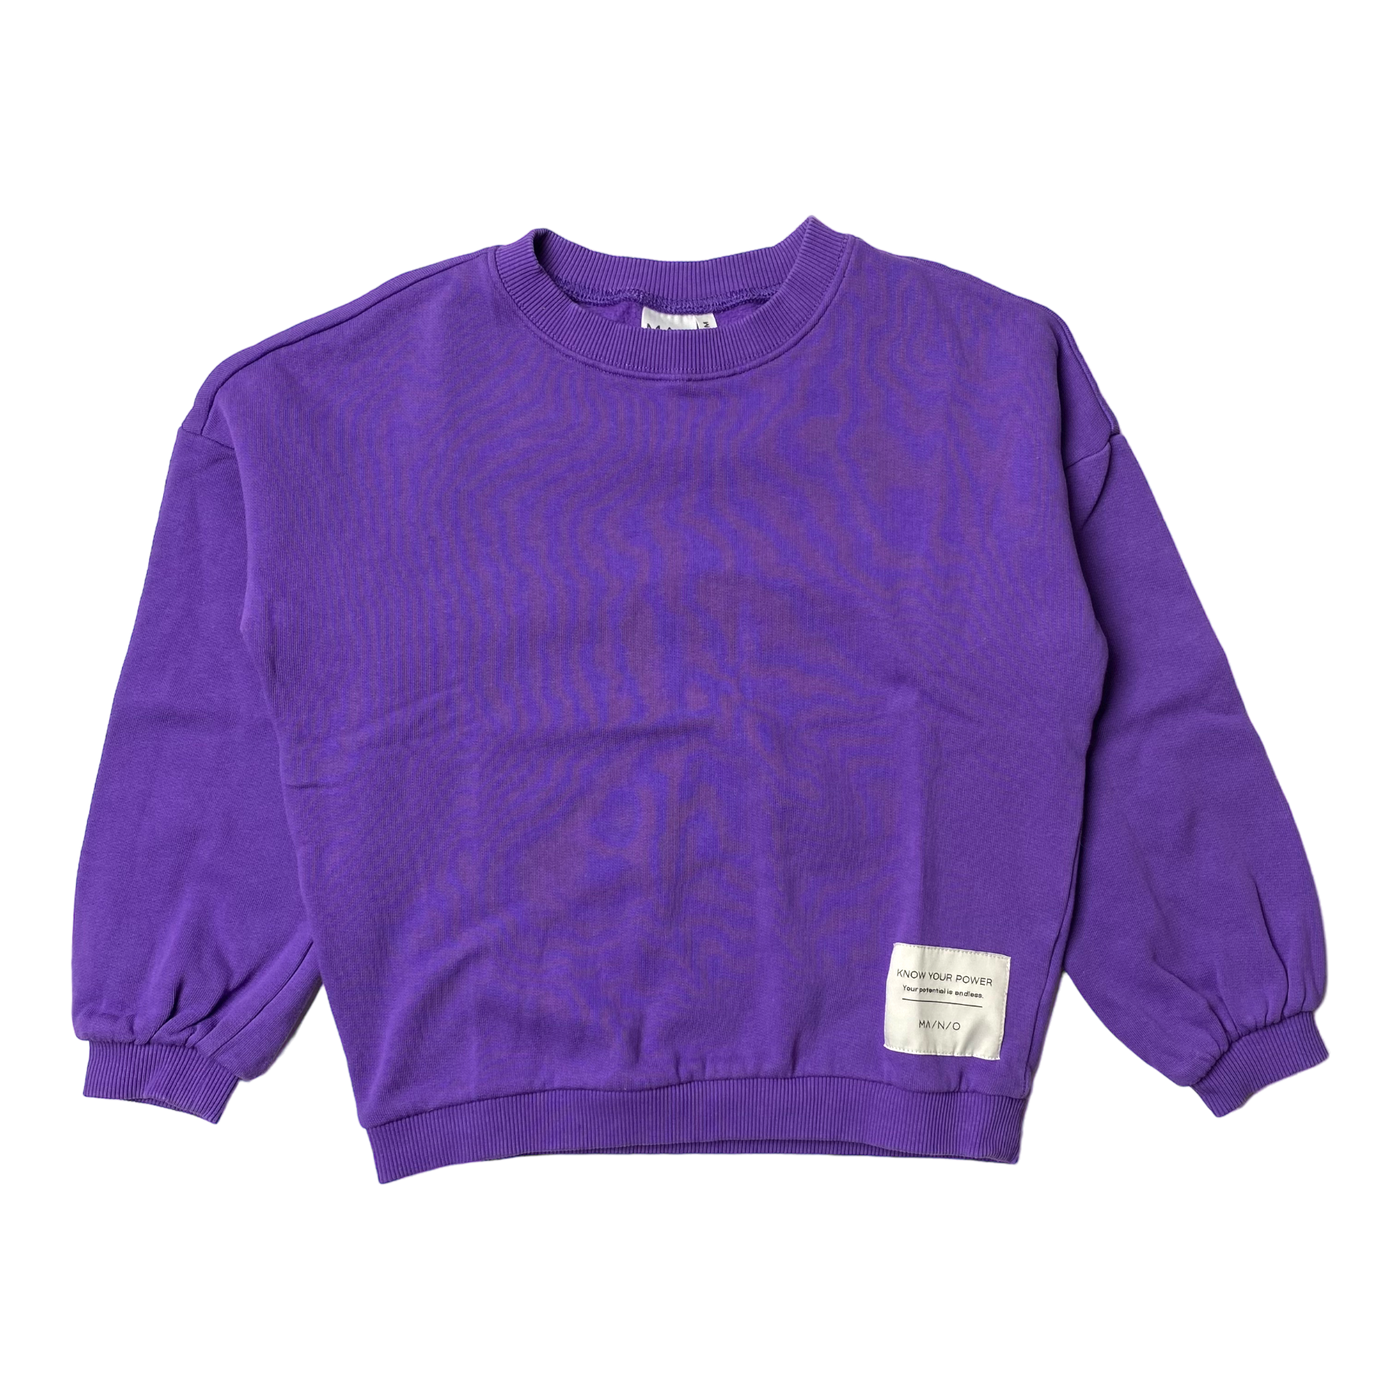 Mainio sweatshirt, purple | 134/140cm